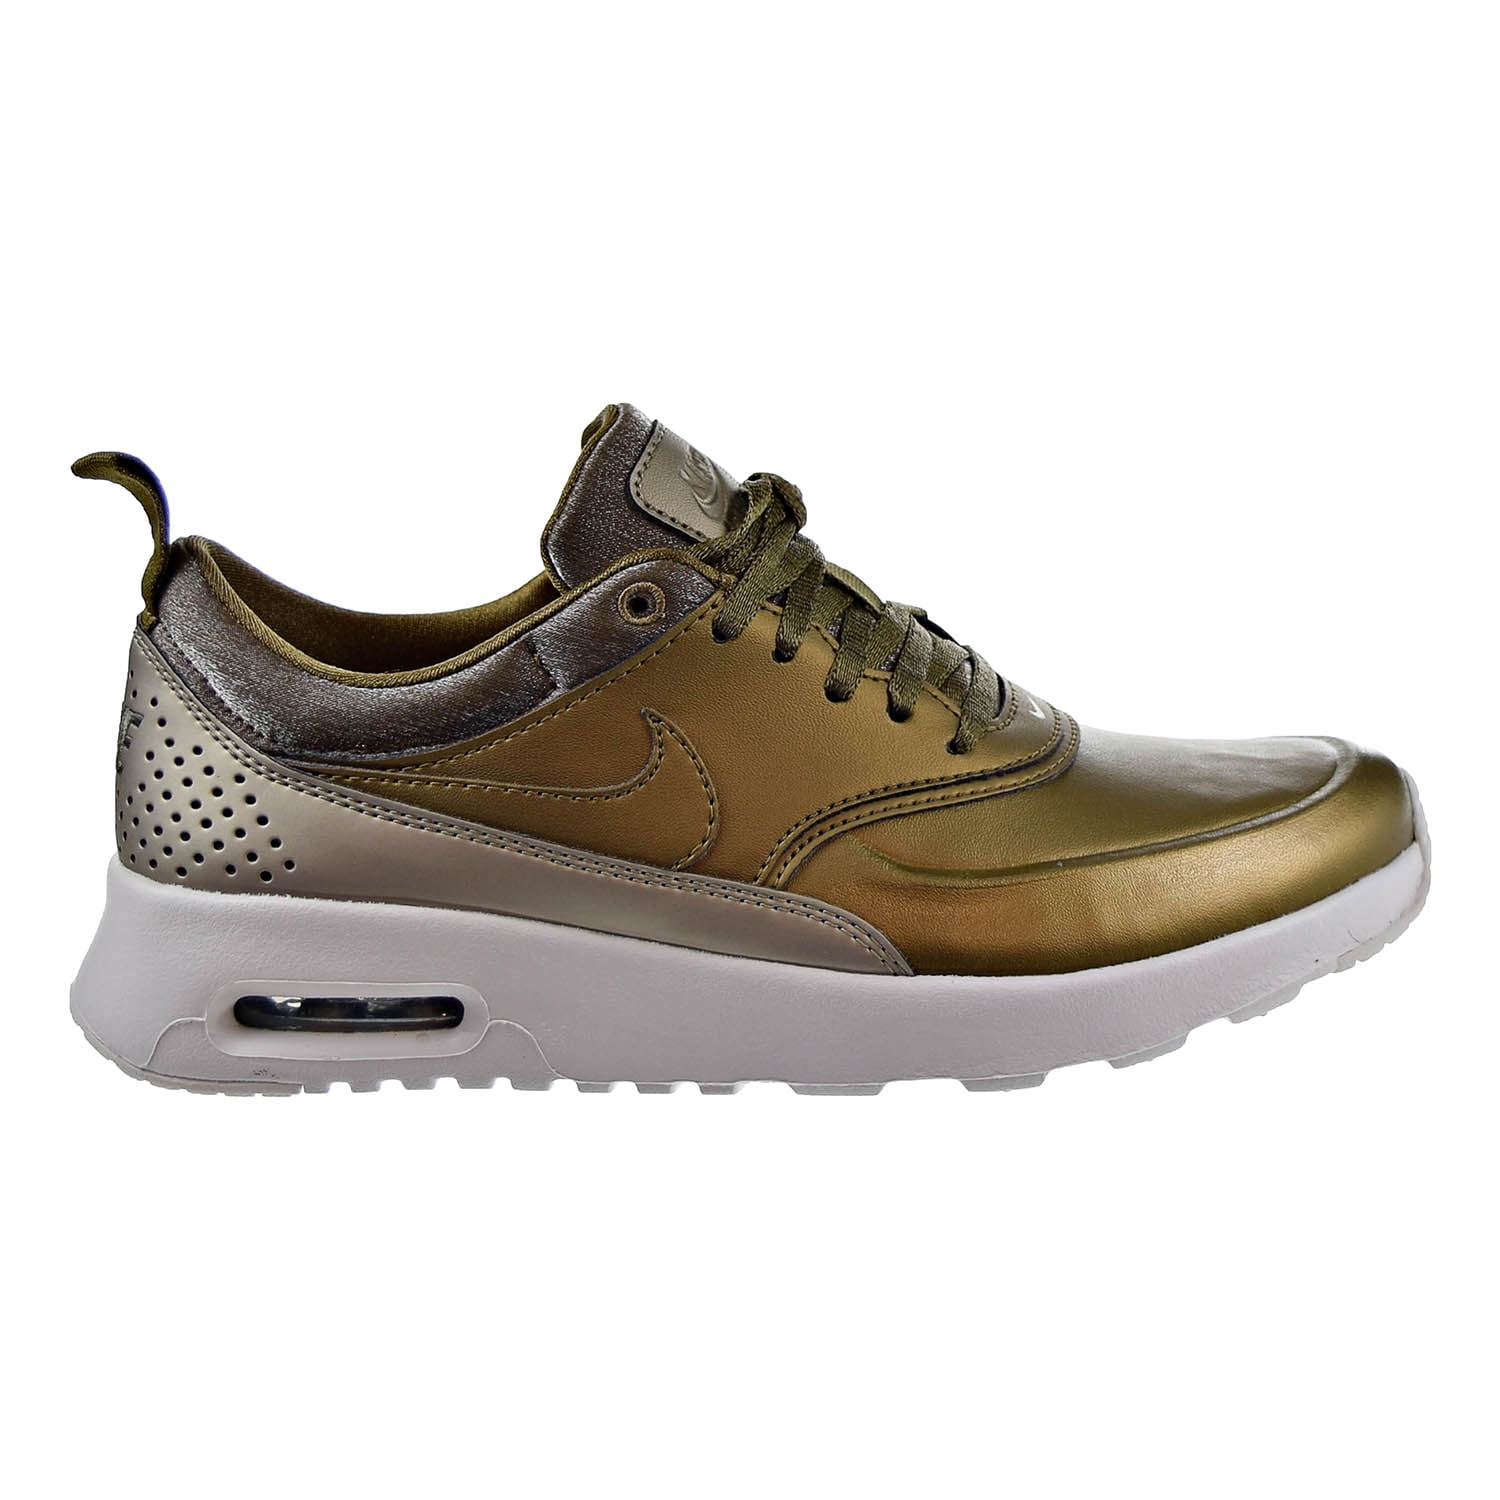 Nike Air Max Premium Womens Shoes Metallic Field/Metallic Field 616723-902 - Walmart.com